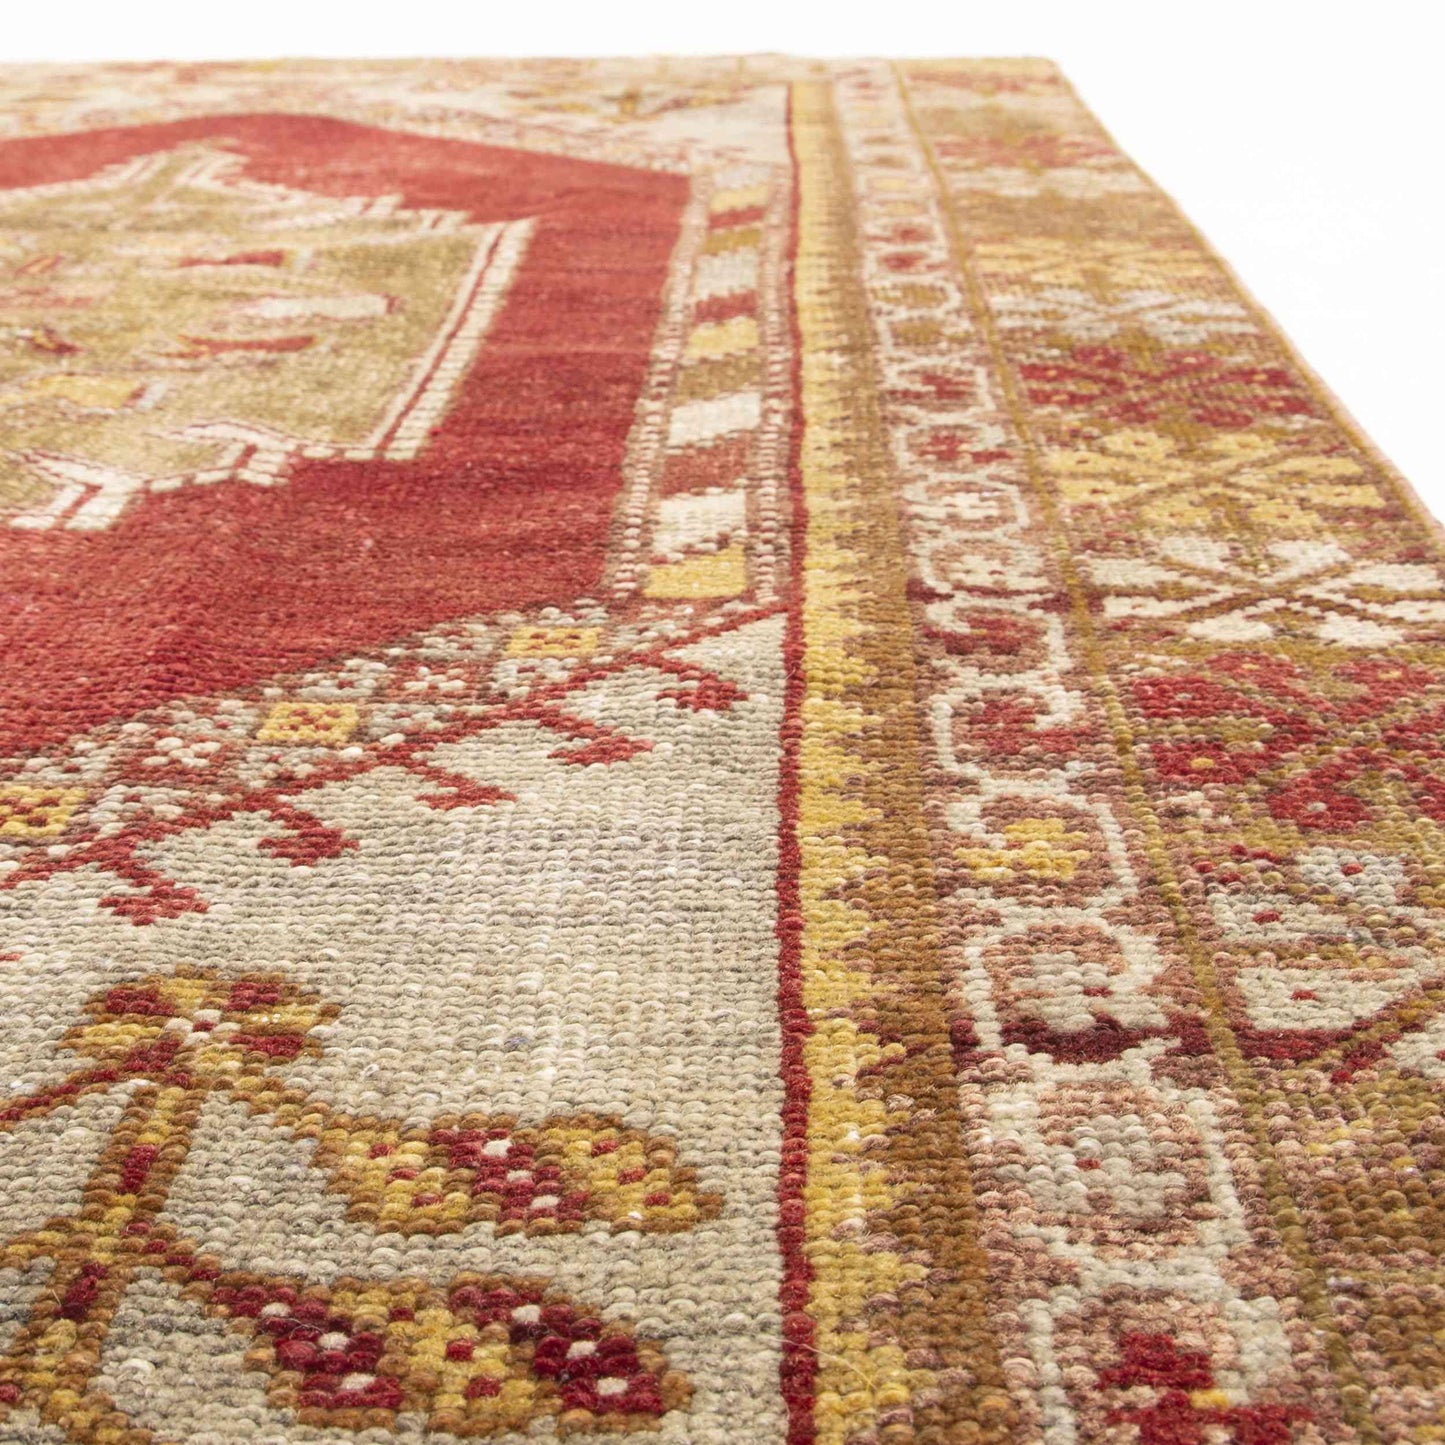 Oriental Rug Anatolian Handwoven Wool On Wool 97 x 170 Cm - 3' 3'' x 5' 7'' Red C014 ER01